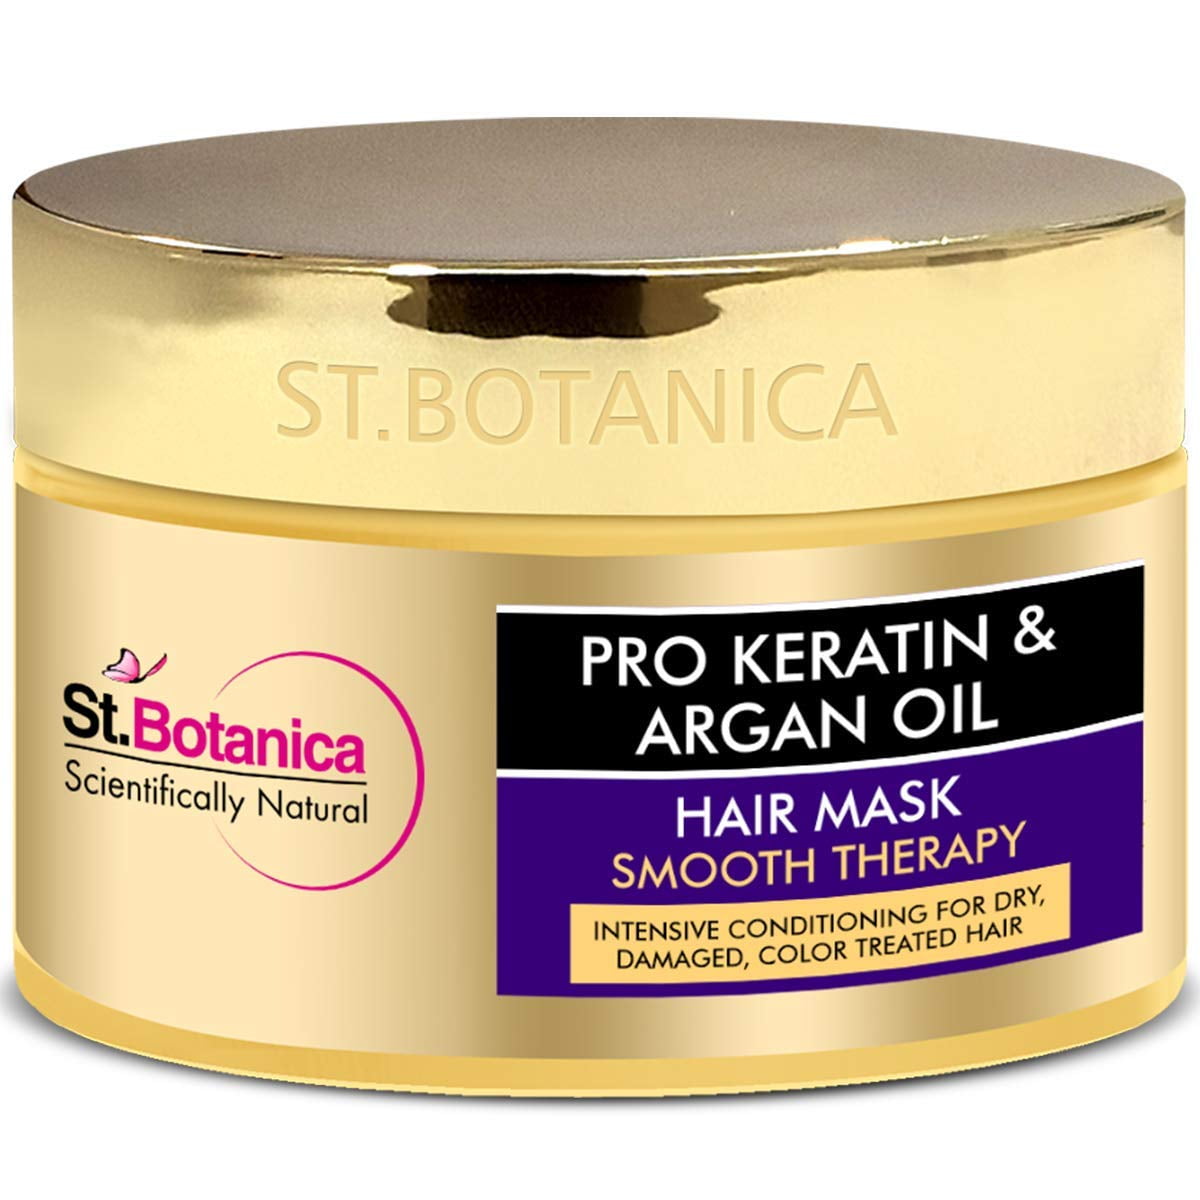  Pro Keratin and Argan Oil Hair Mask - 200ml 